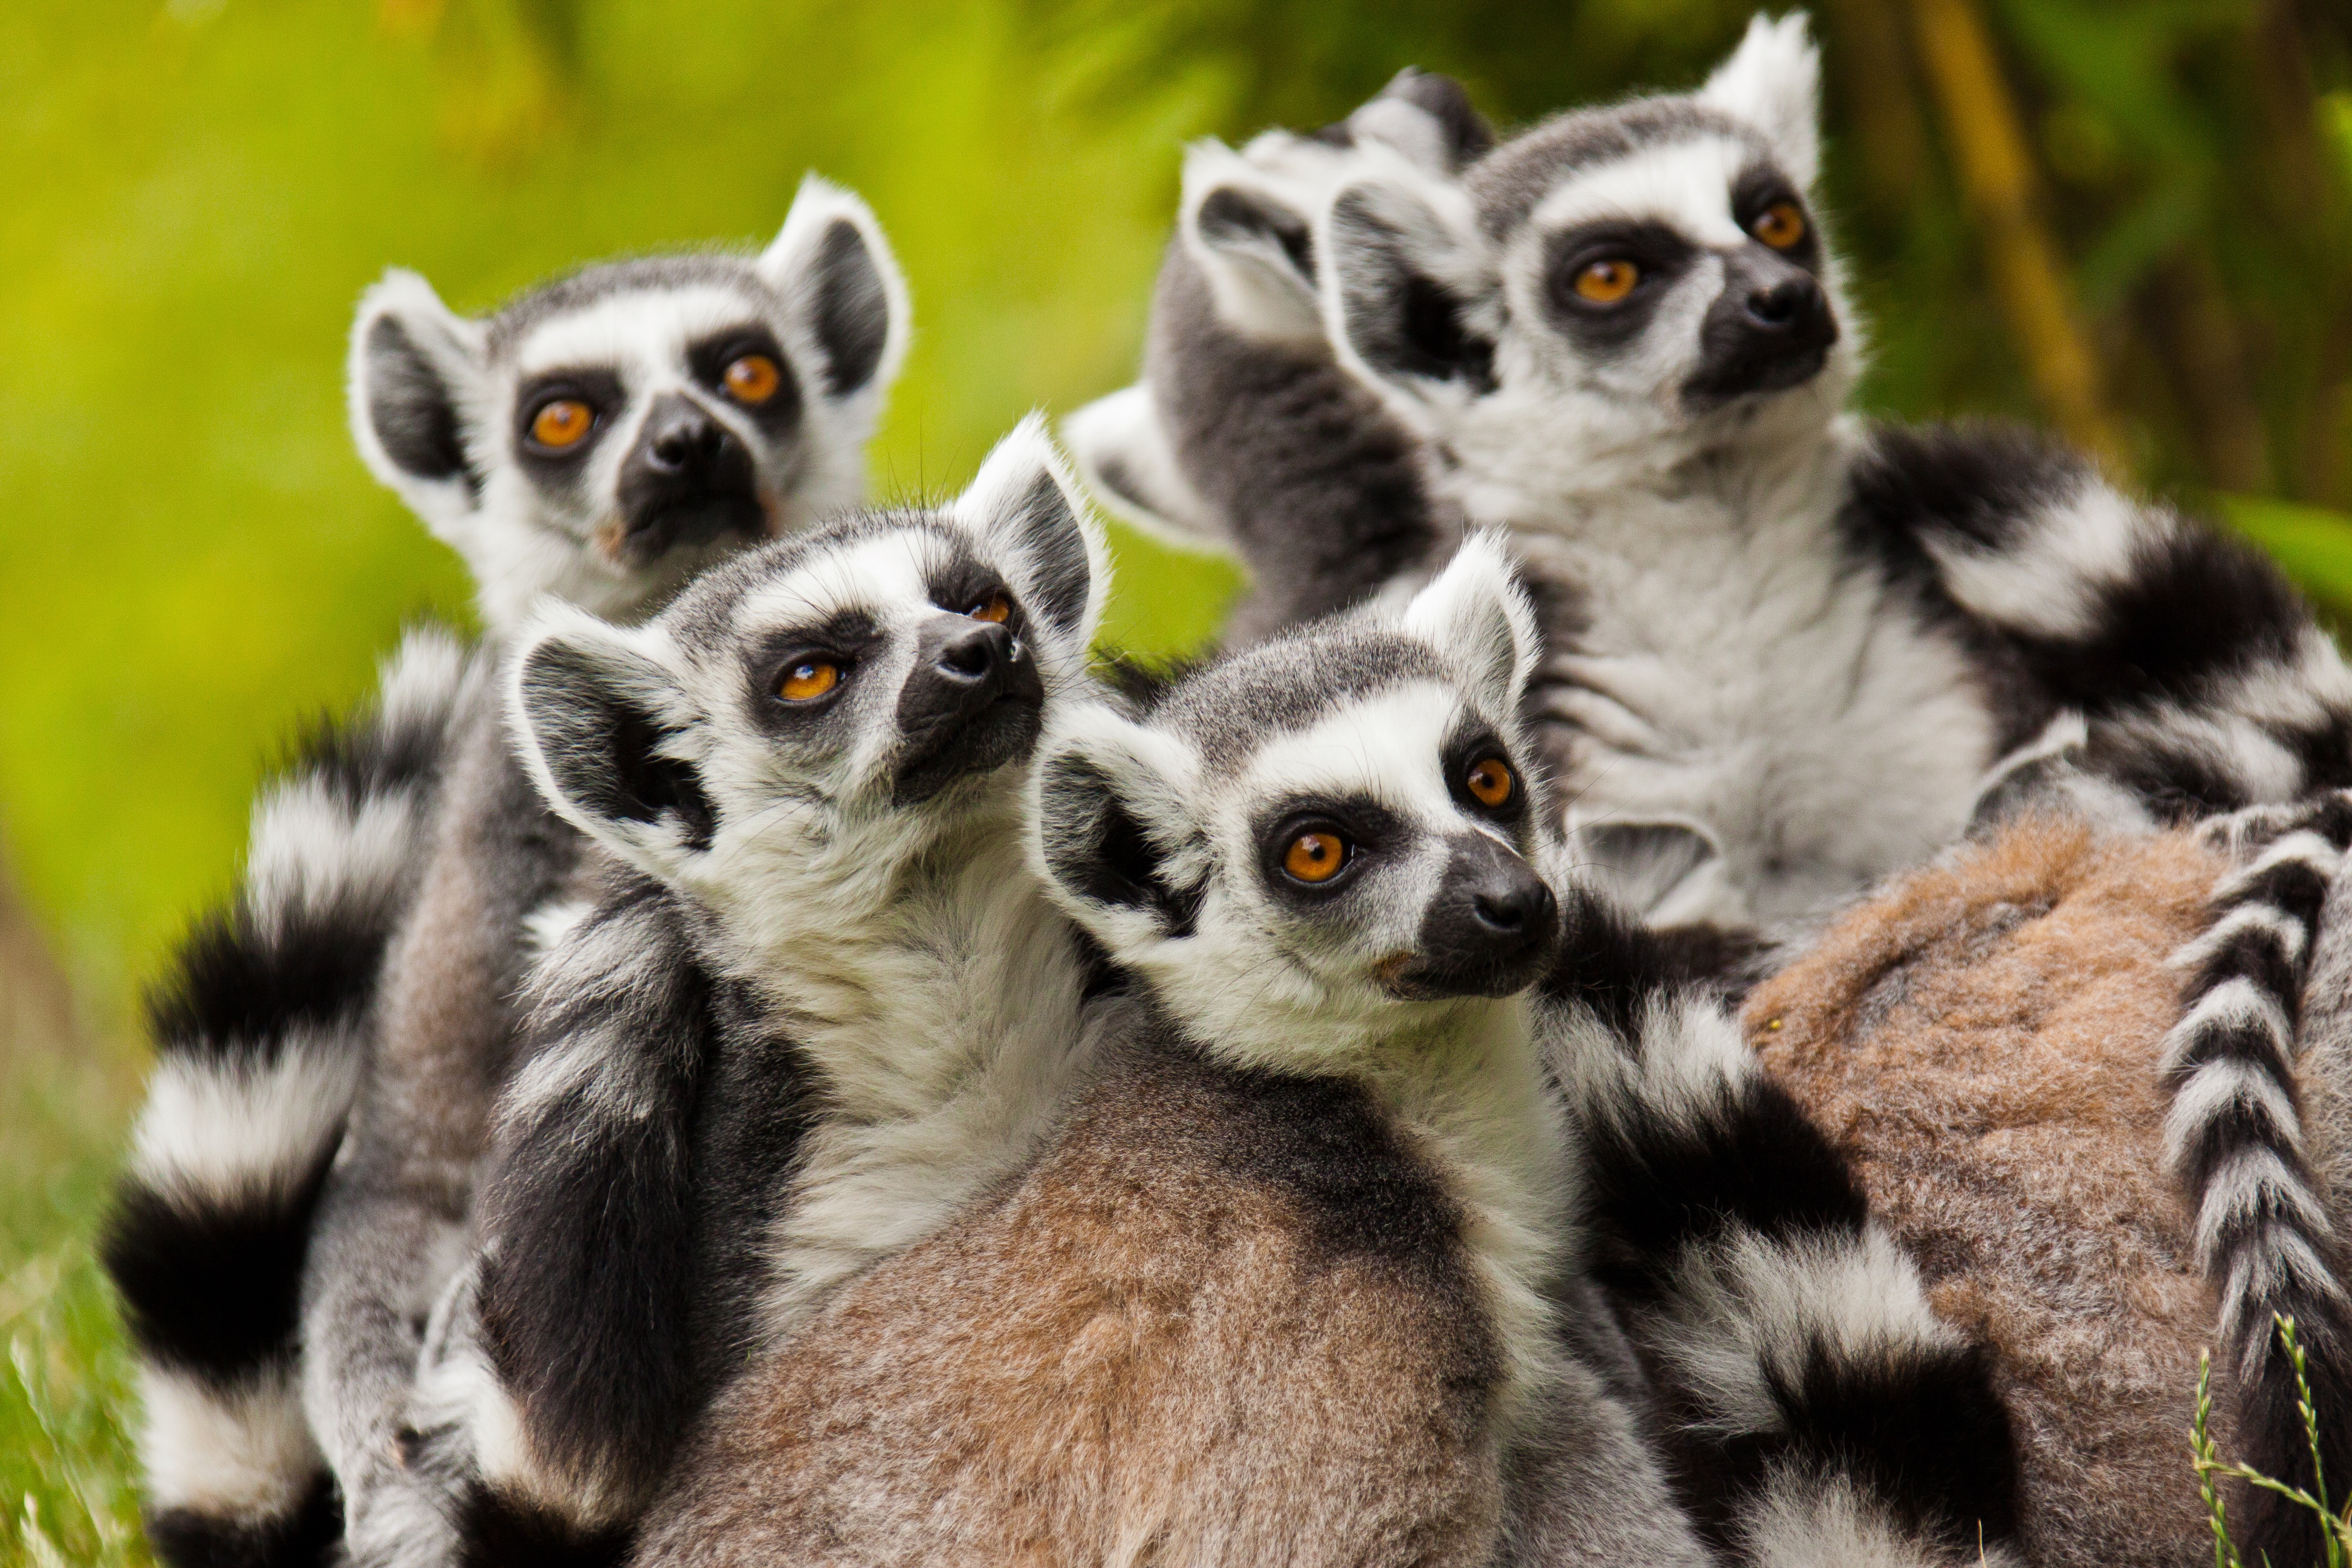 8k Ring Tailed Lemur Images